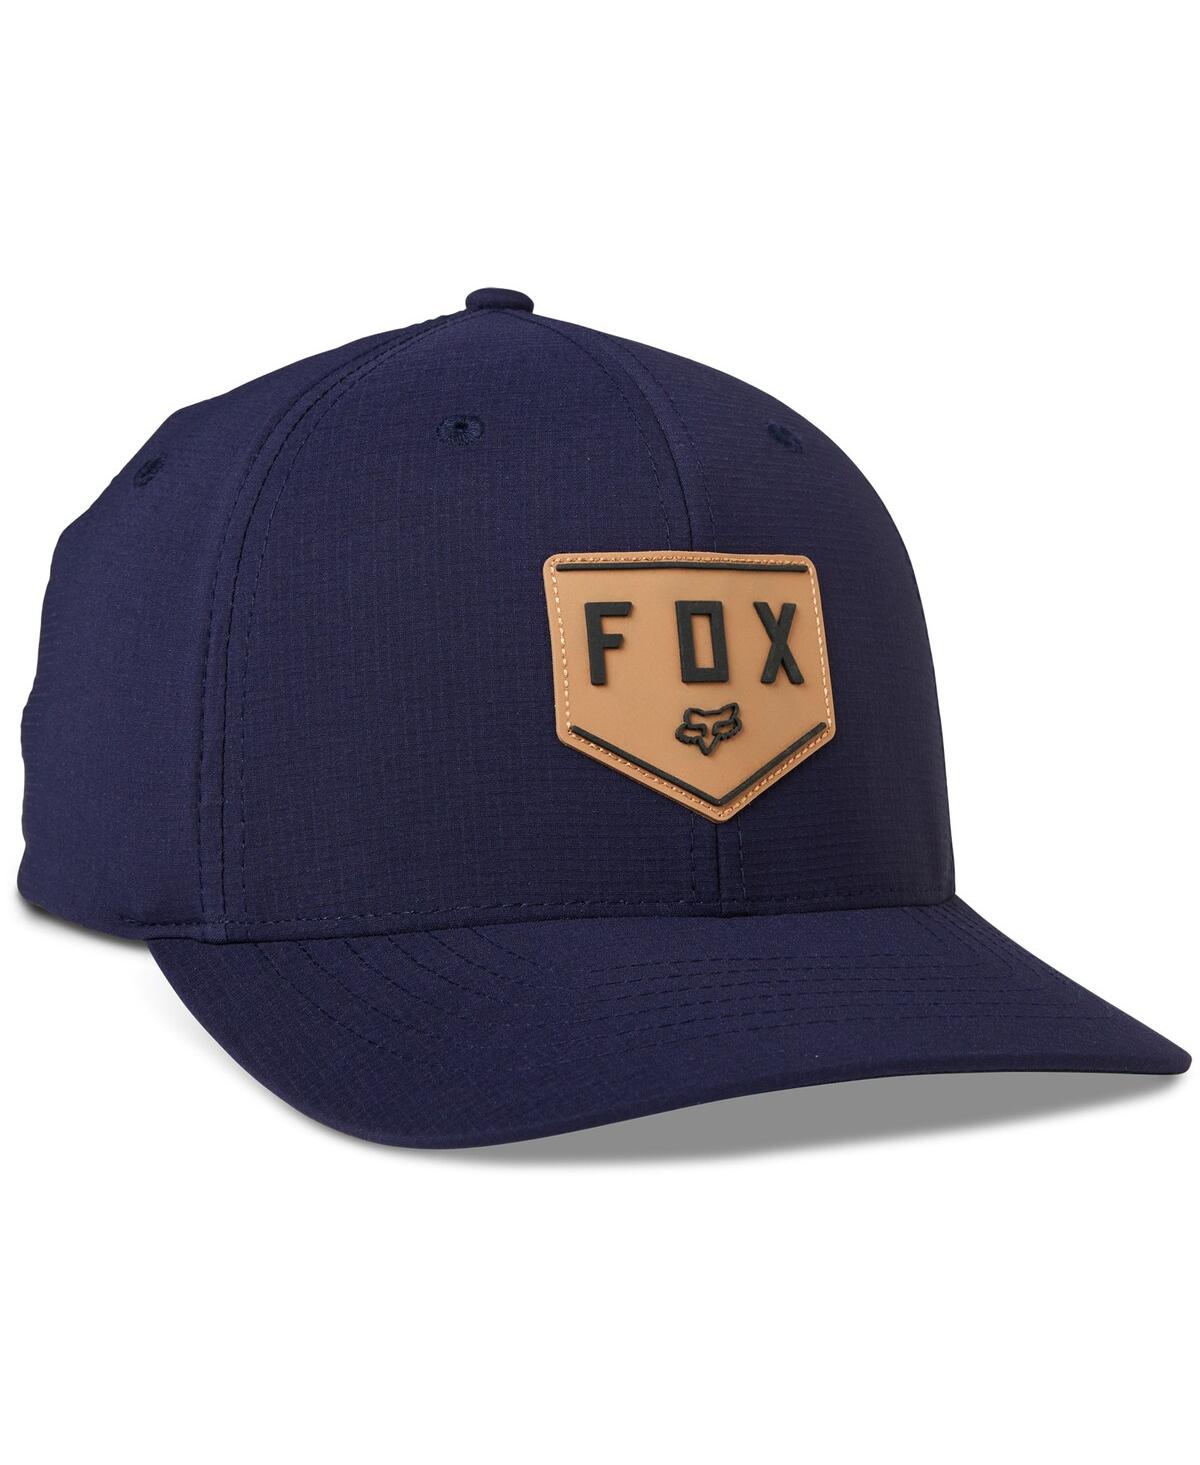 Men's Fox Navy Shield Tech Flex Hat - Navy